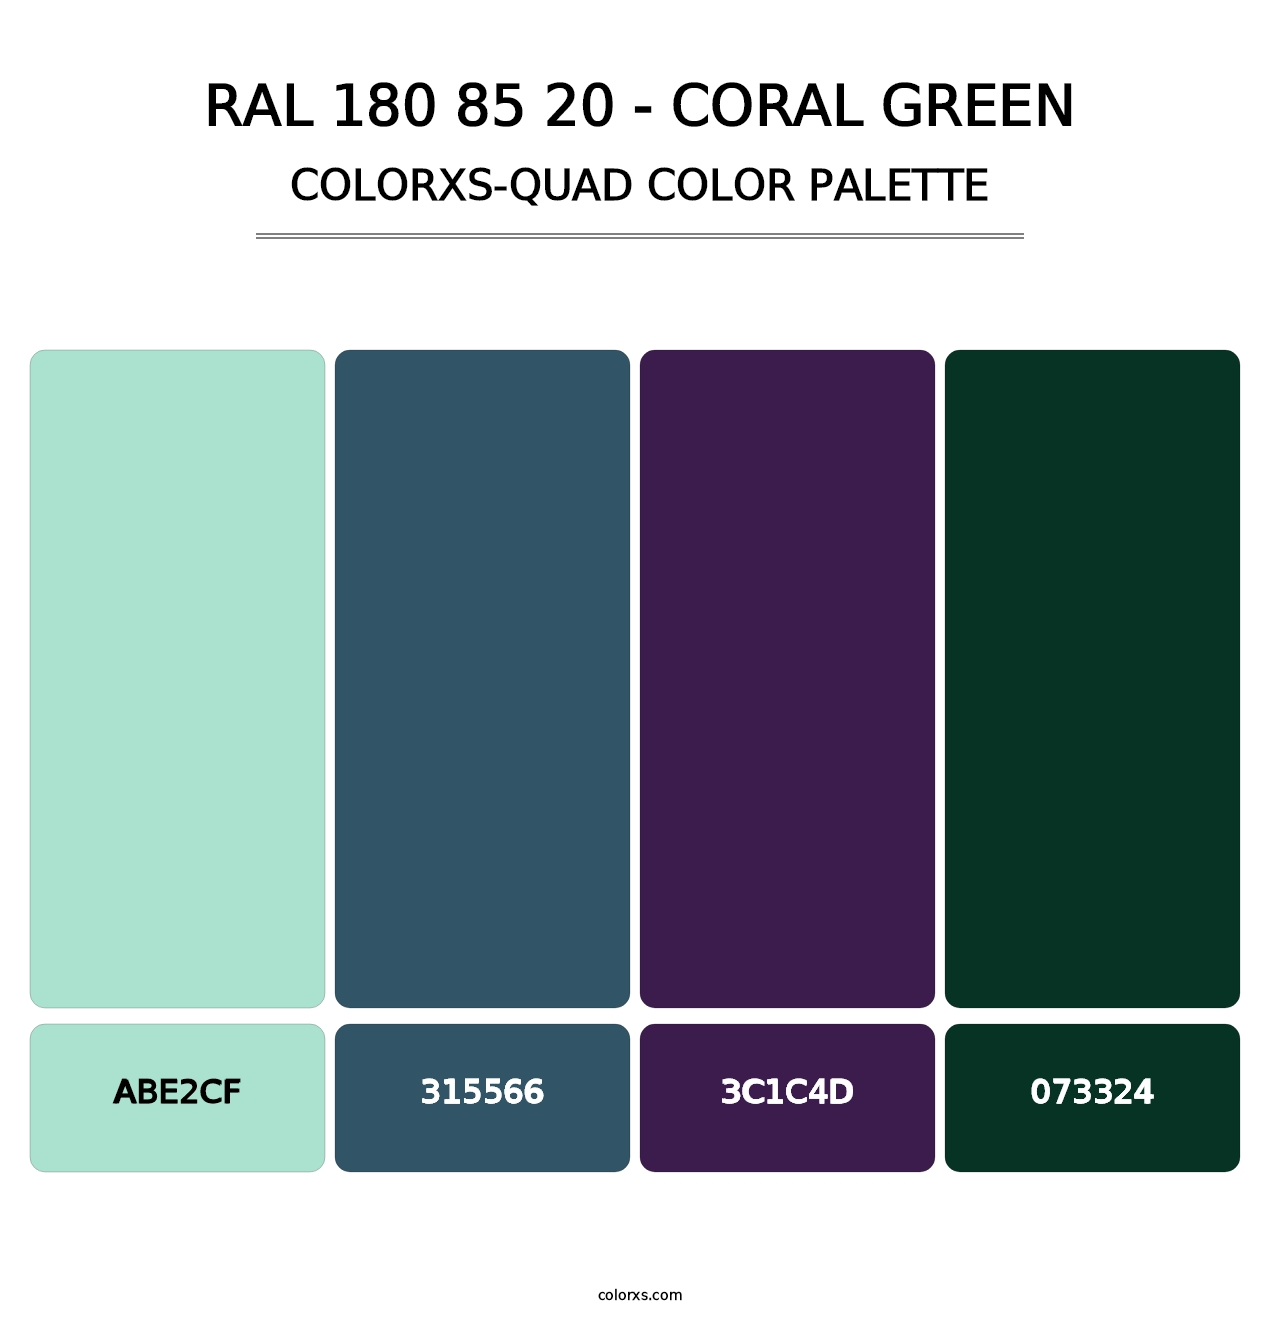 RAL 180 85 20 - Coral Green - Colorxs Quad Palette